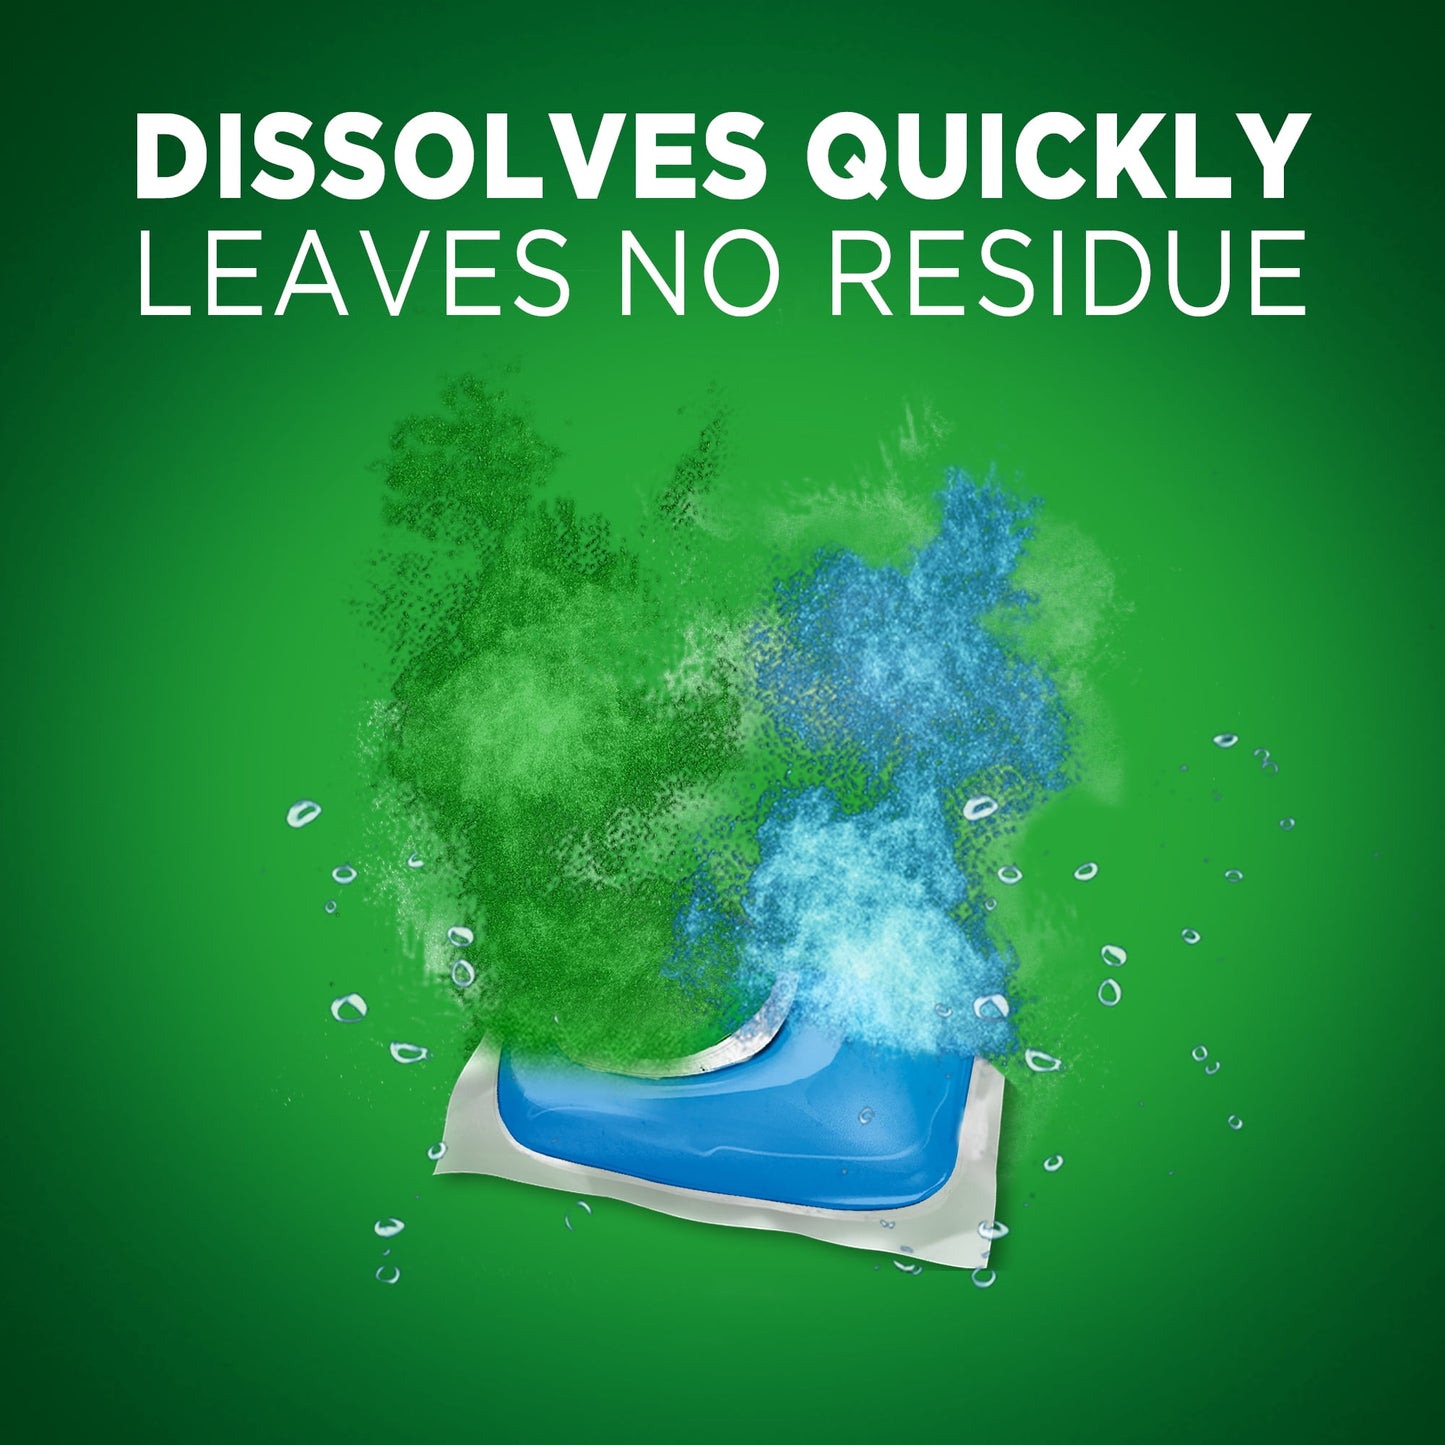 Cascade Complete ActionPacs, Dishwasher Detergent Pods, Fresh, 27 Count